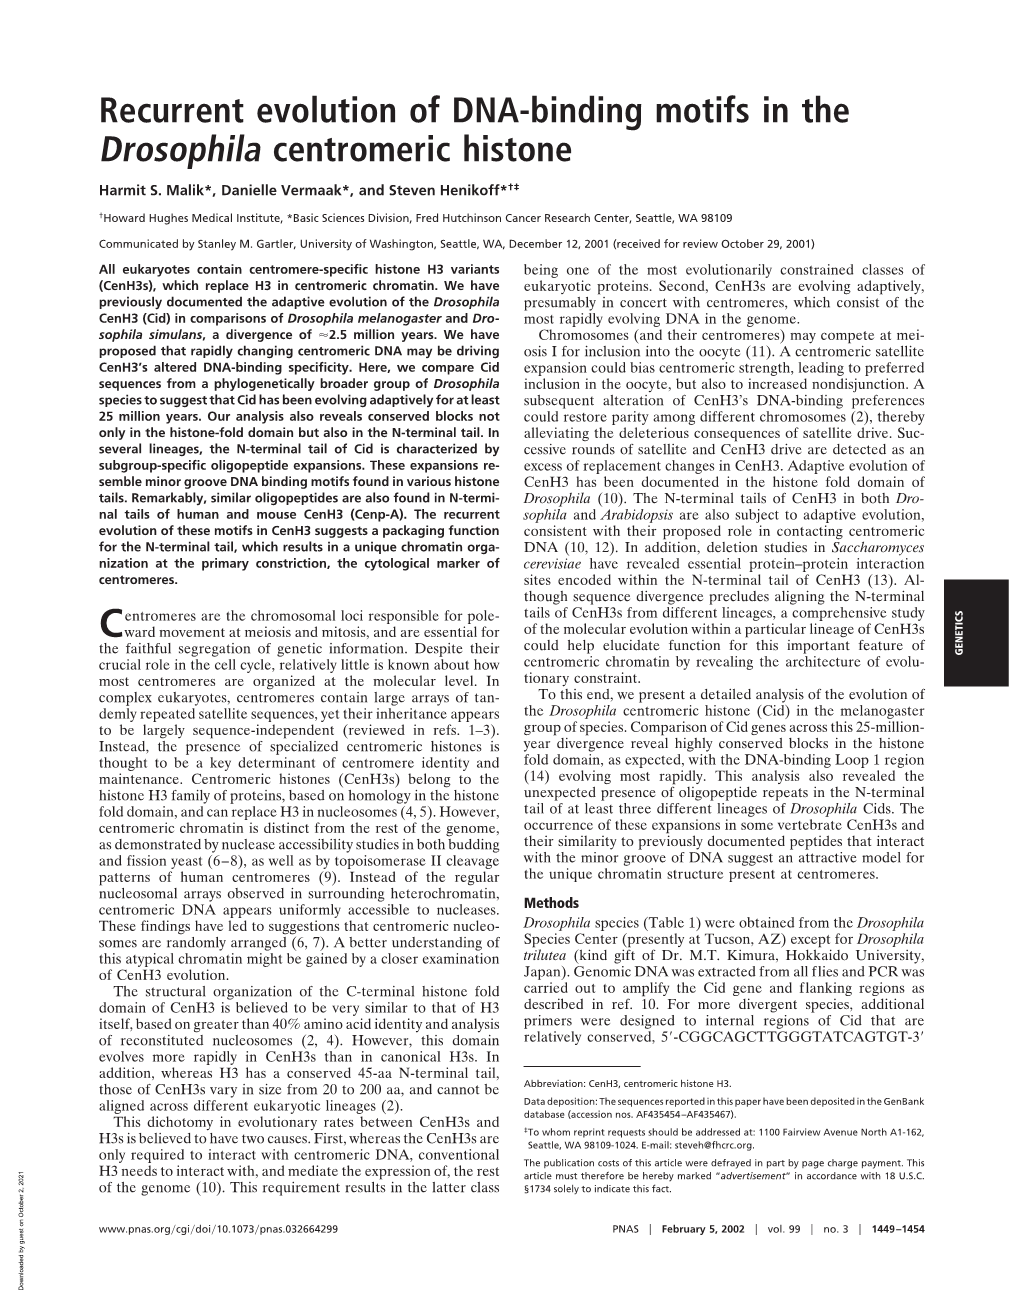 Recurrent Evolution of DNA-Binding Motifs in the Drosophila Centromeric Histone